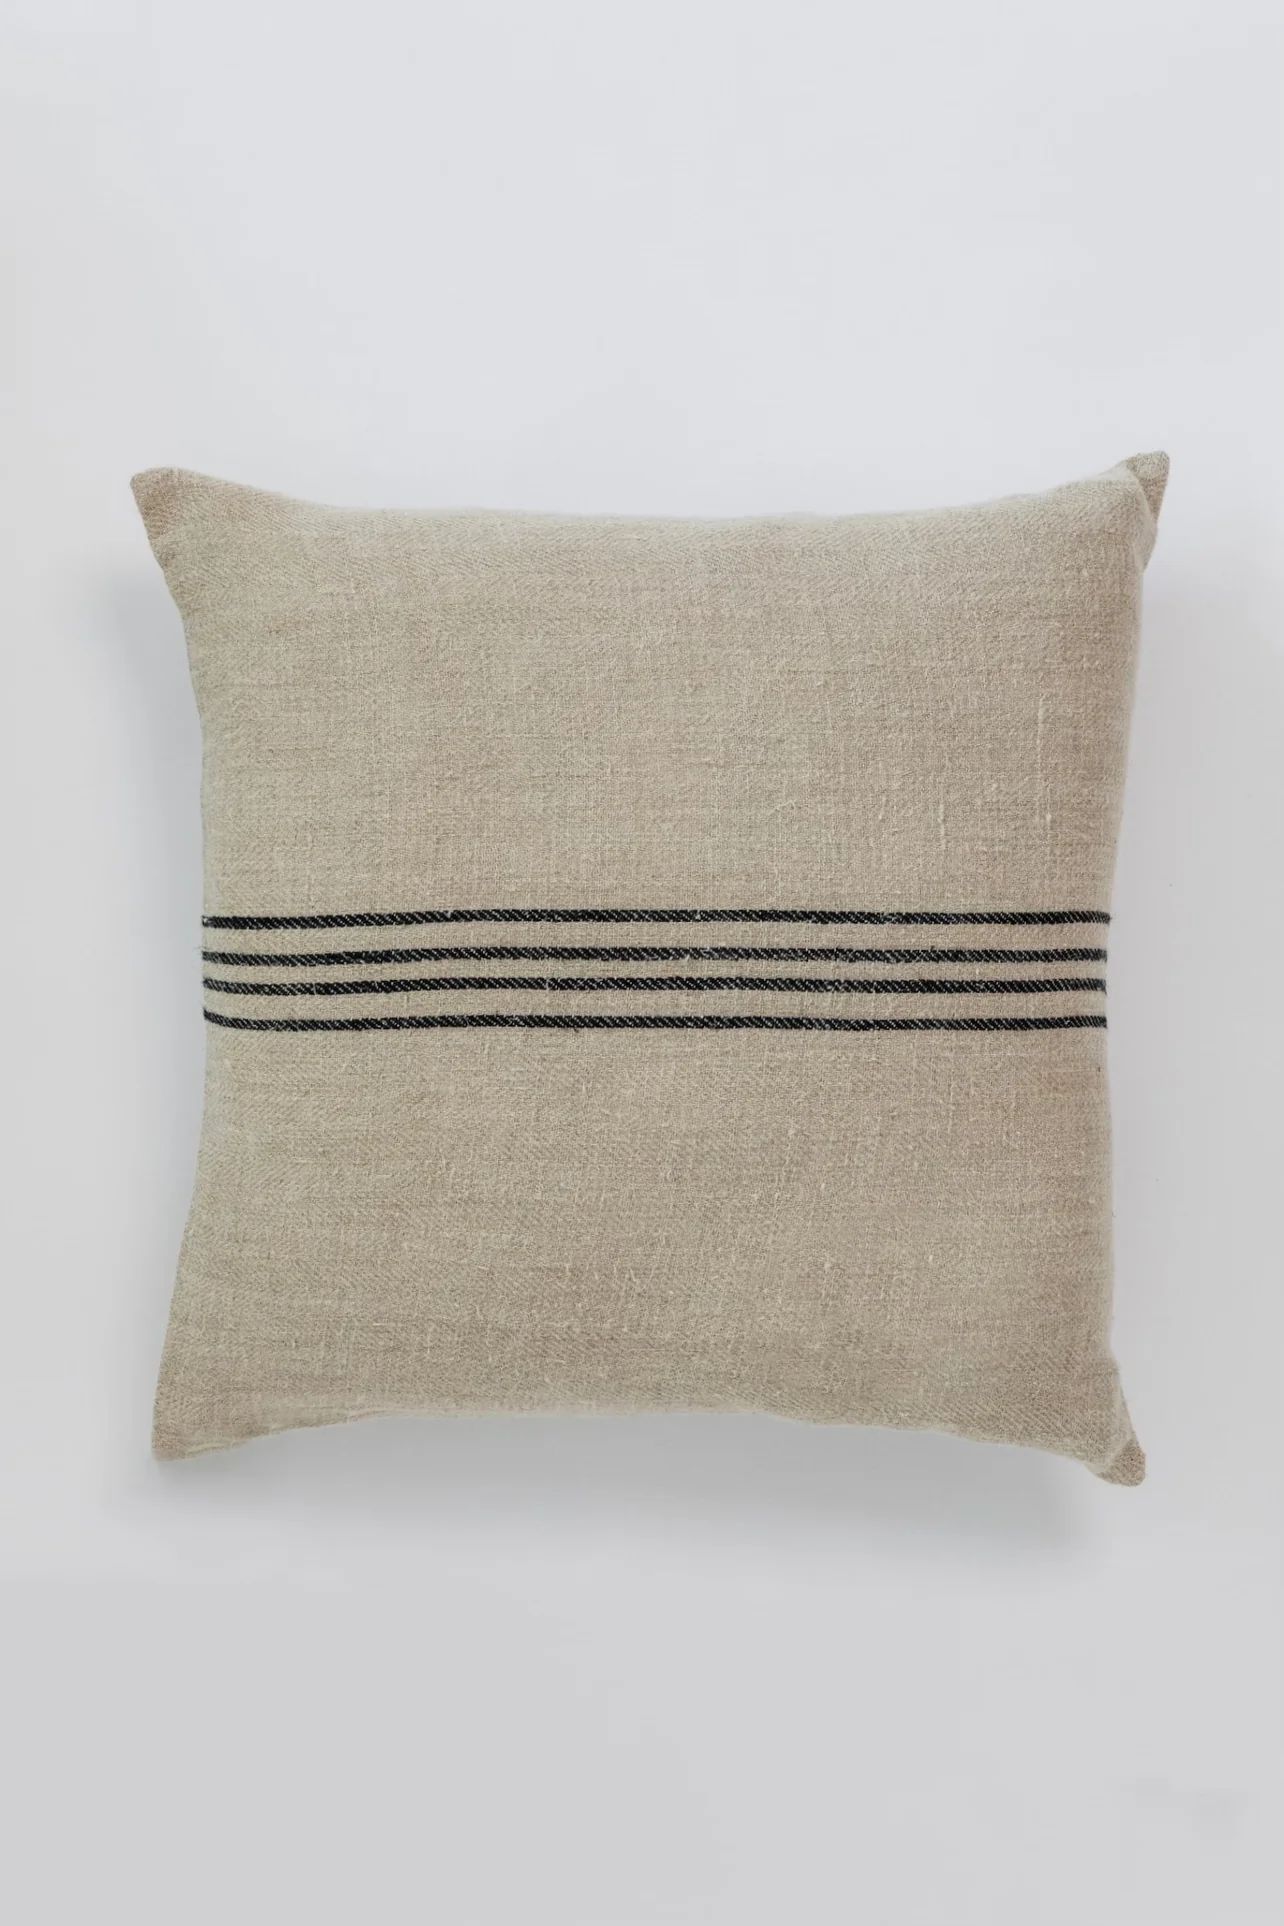 Harden Striped Linen Pillow - Tan | THELIFESTYLEDCO